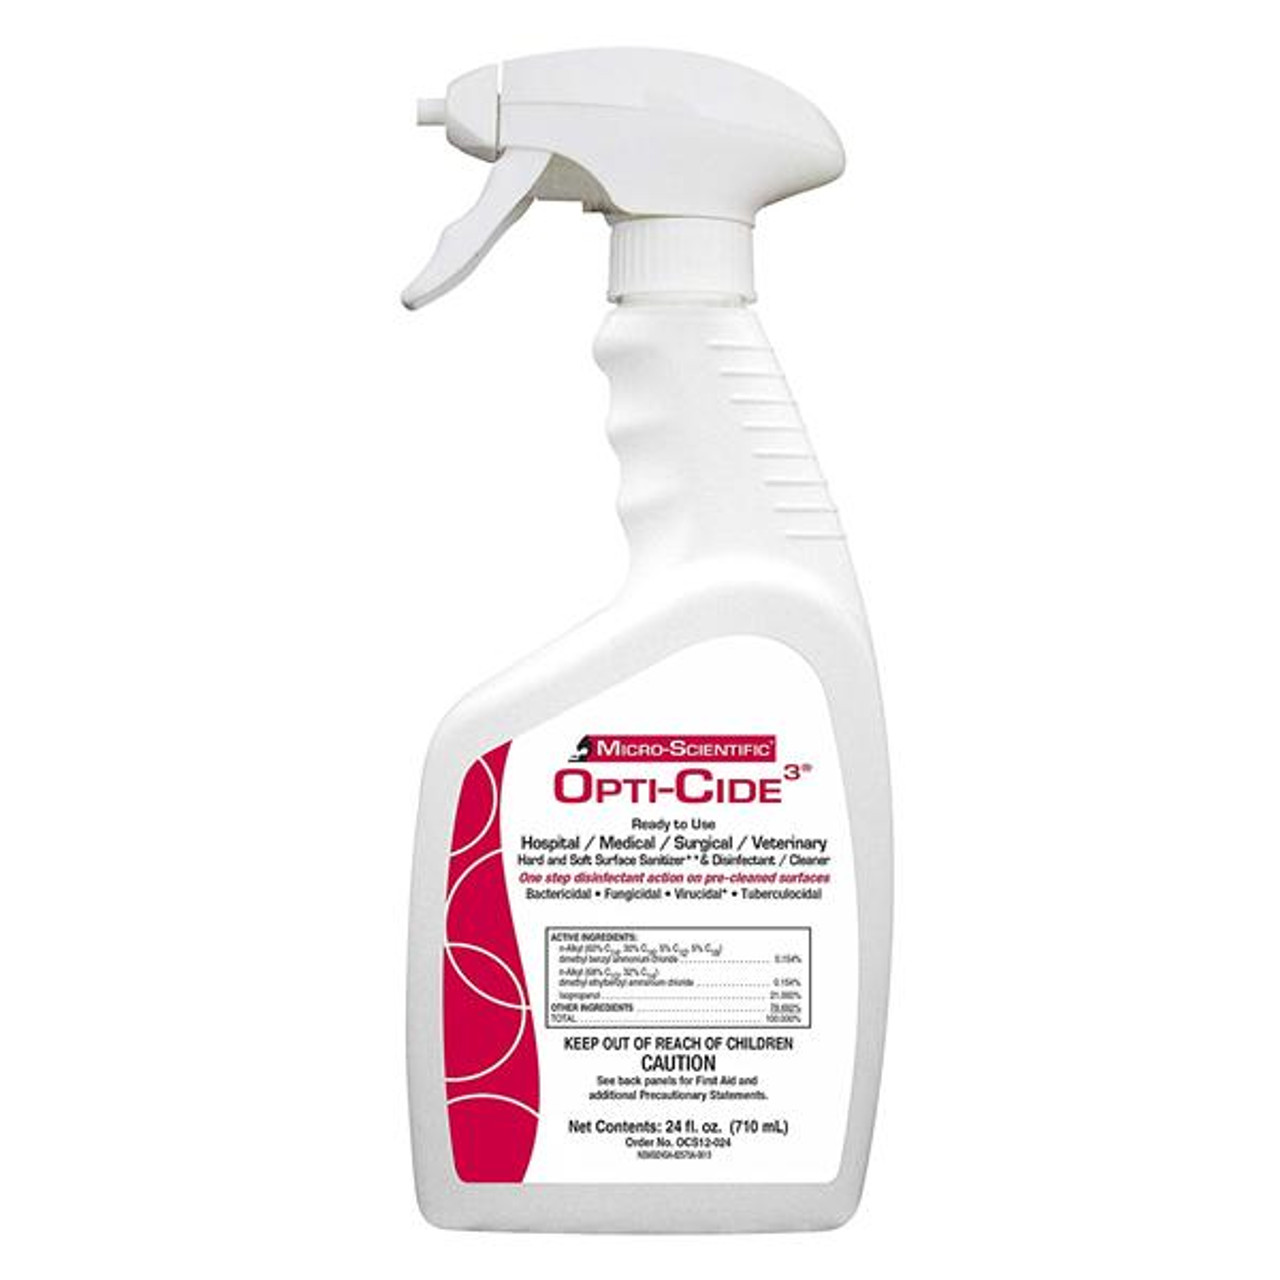 Micro-Scientific Opti-Cide3 Surface Disinfectant, 24oz. bottle or gallon